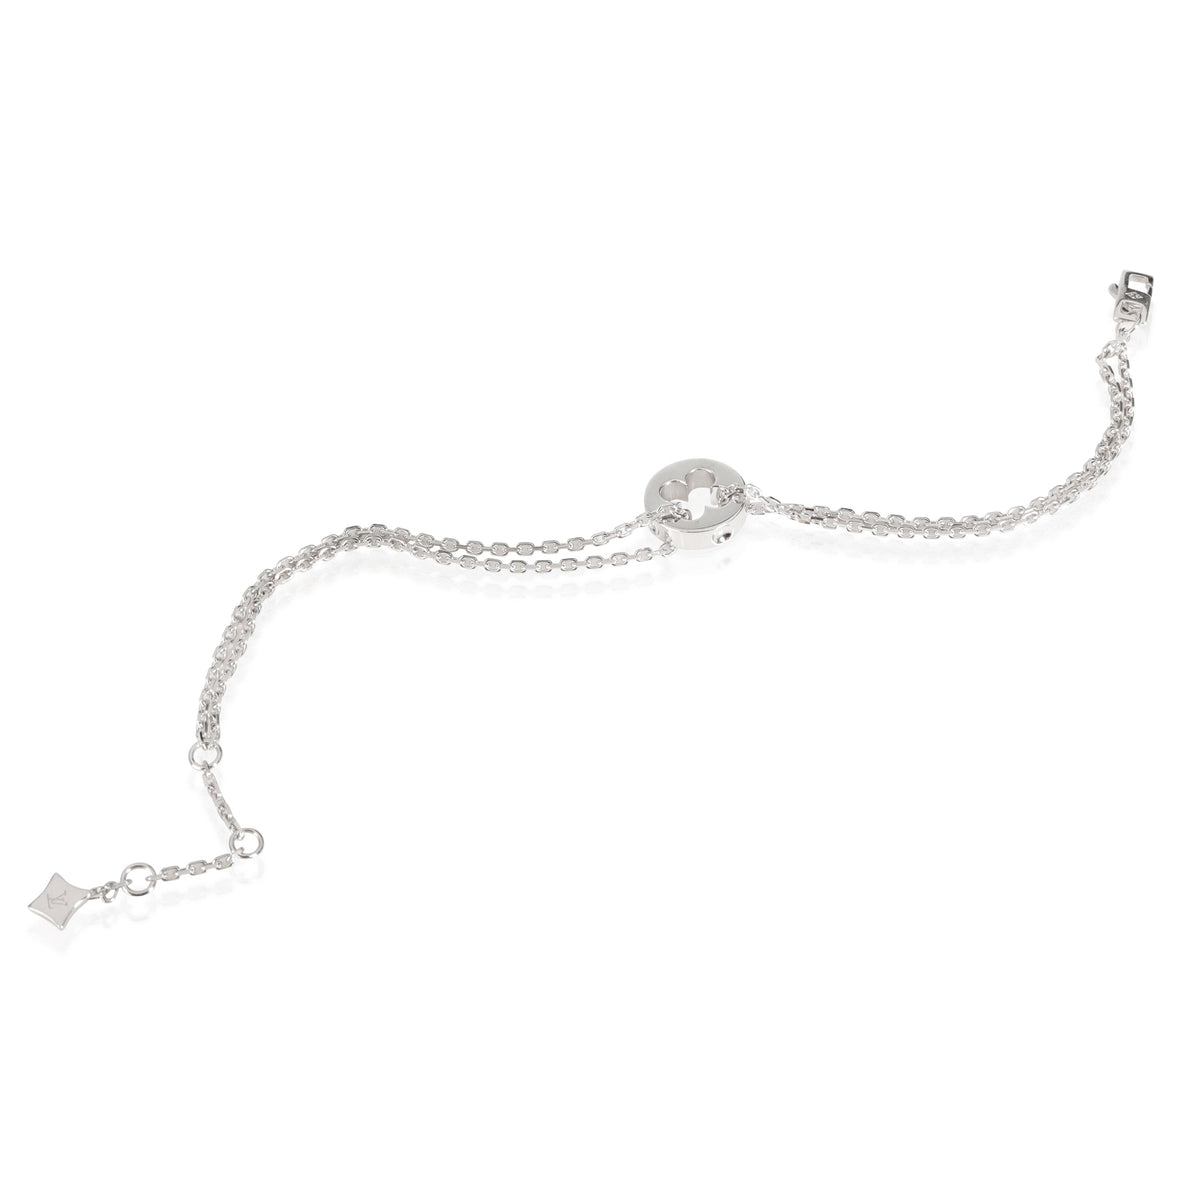 Louis Vuitton Damier Chain Necklace Graphite Silver/Black in